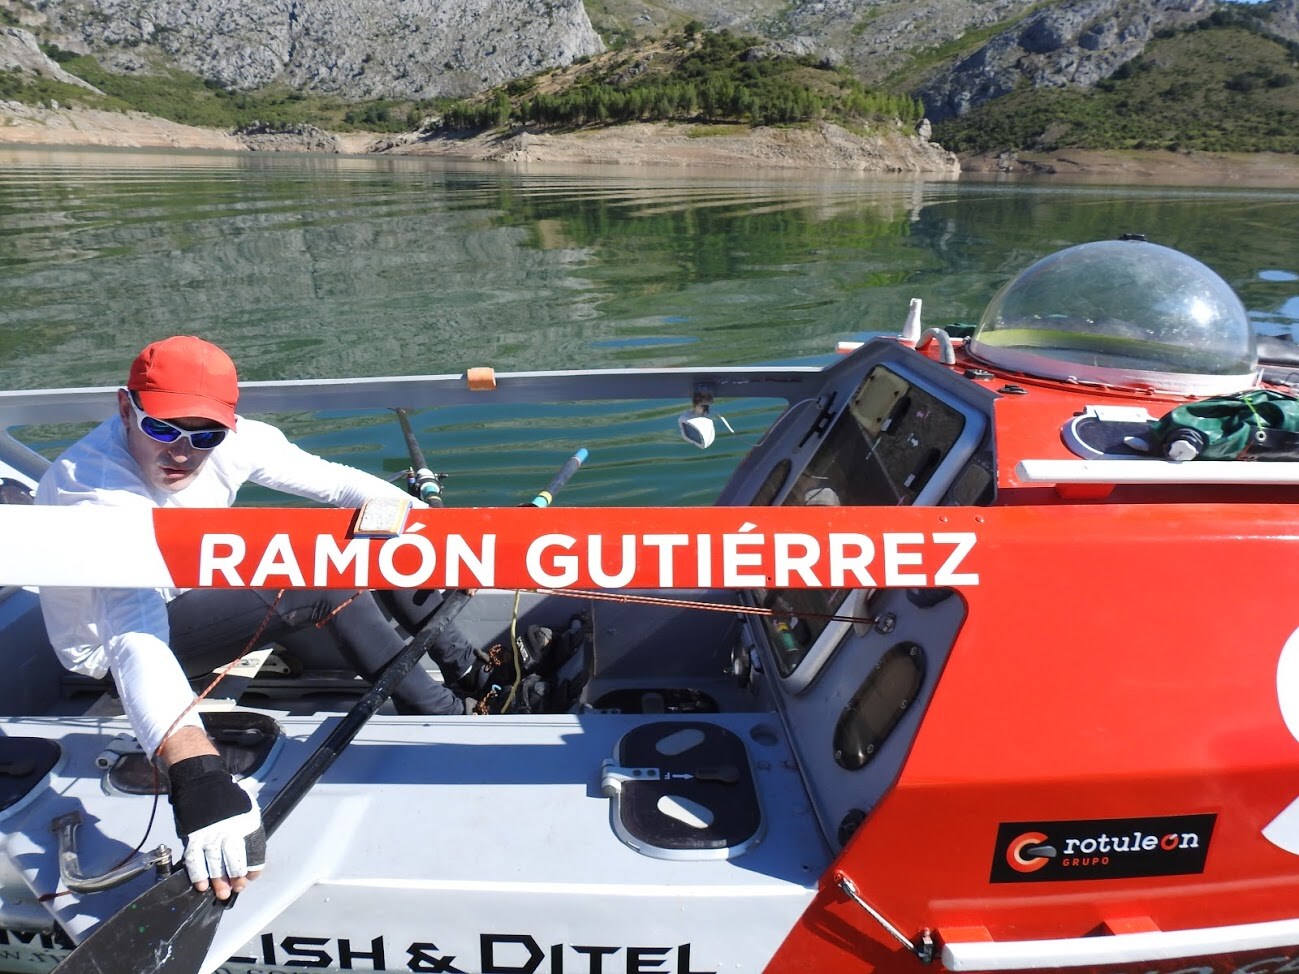 Ramón Gutiérrez se preparar para recorrer el Atlántico de costa a costa.